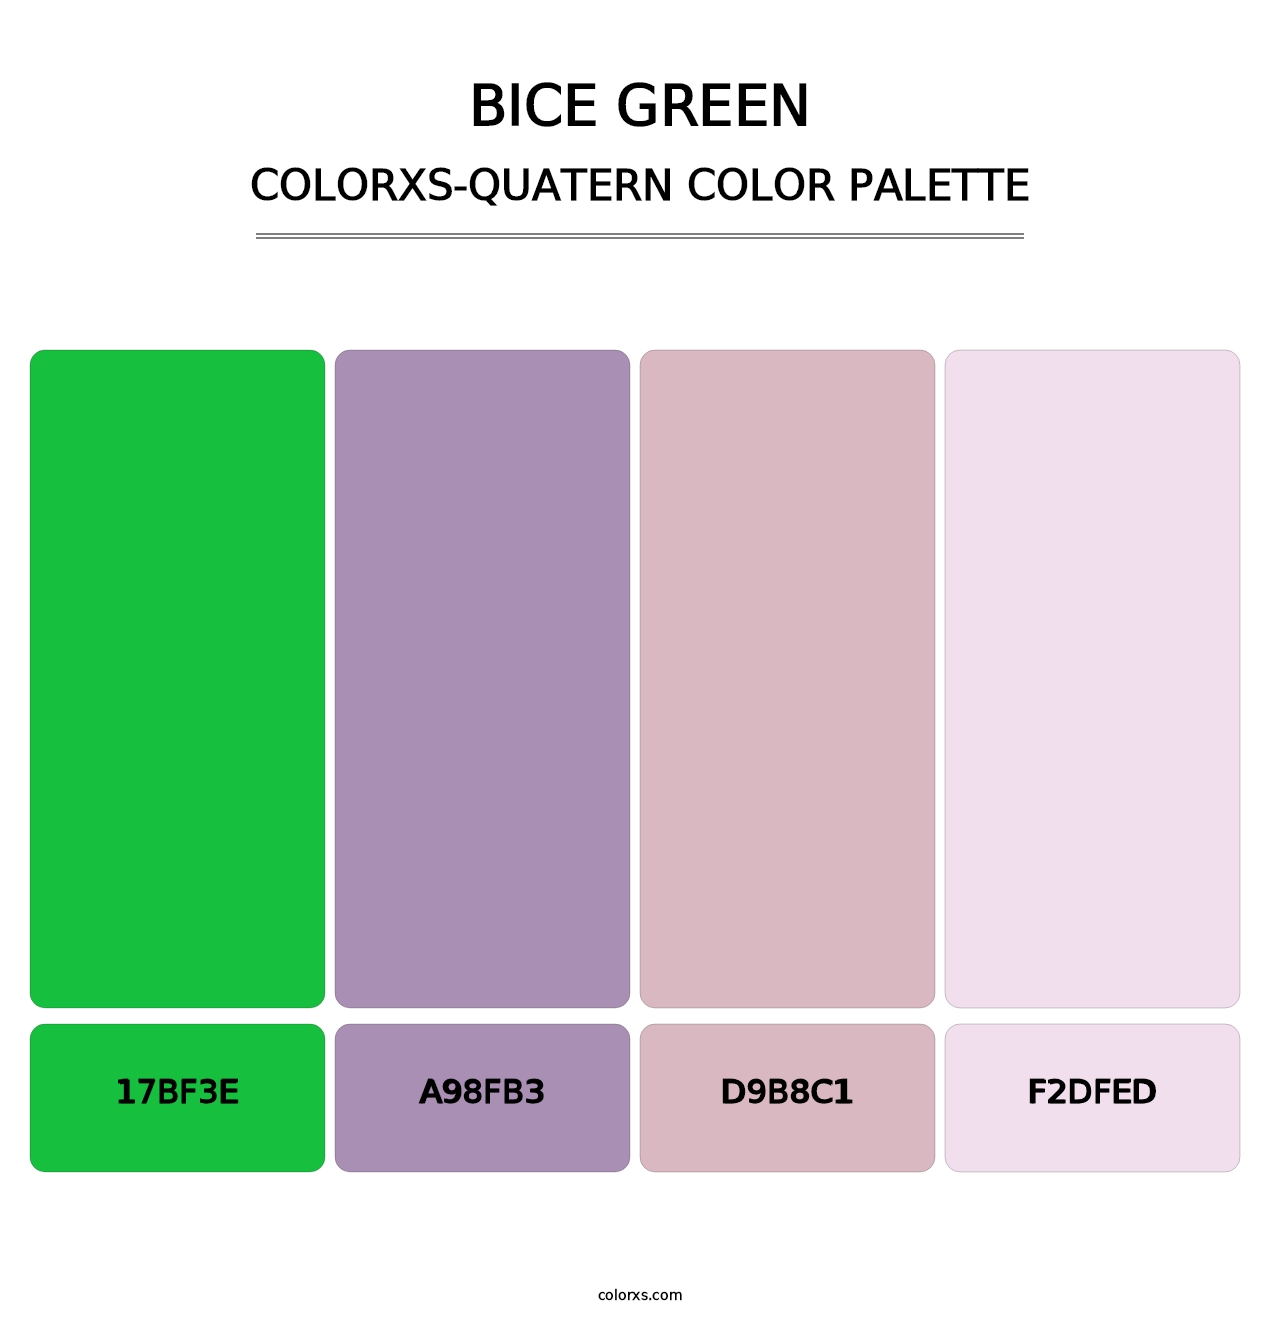 Bice Green - Colorxs Quatern Palette